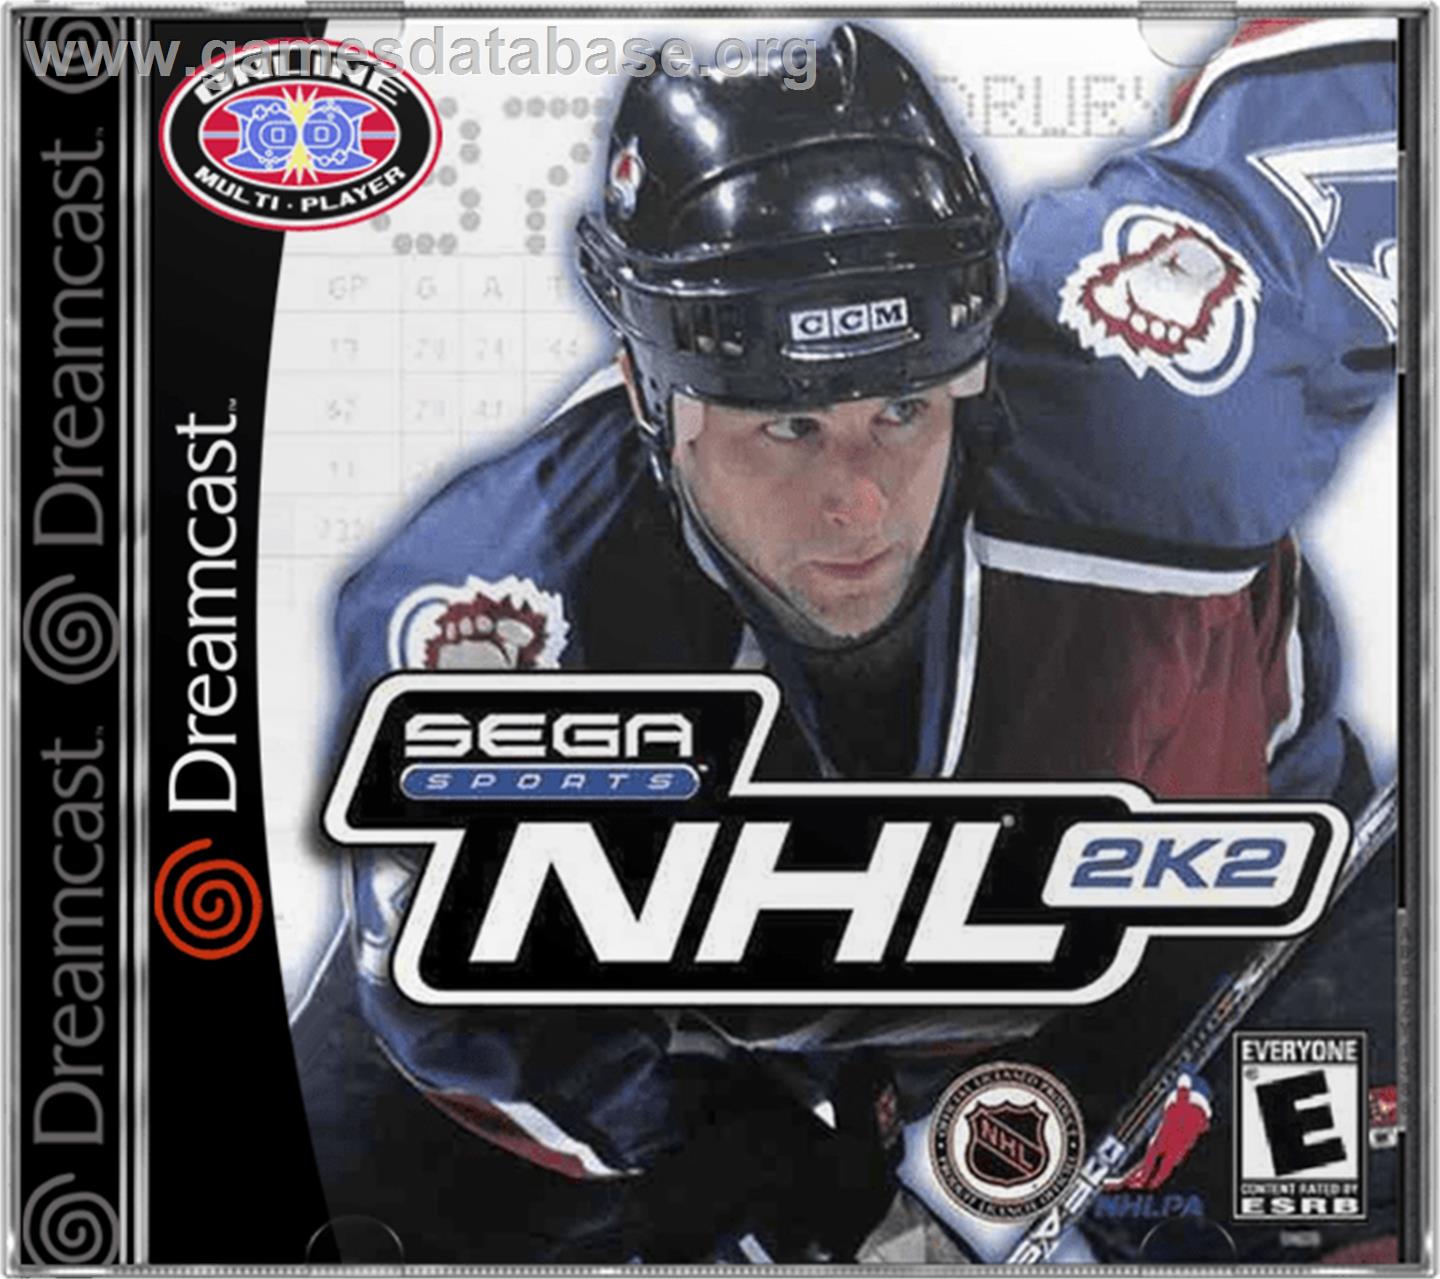 NHL 2K2 - Sega Dreamcast - Artwork - Box